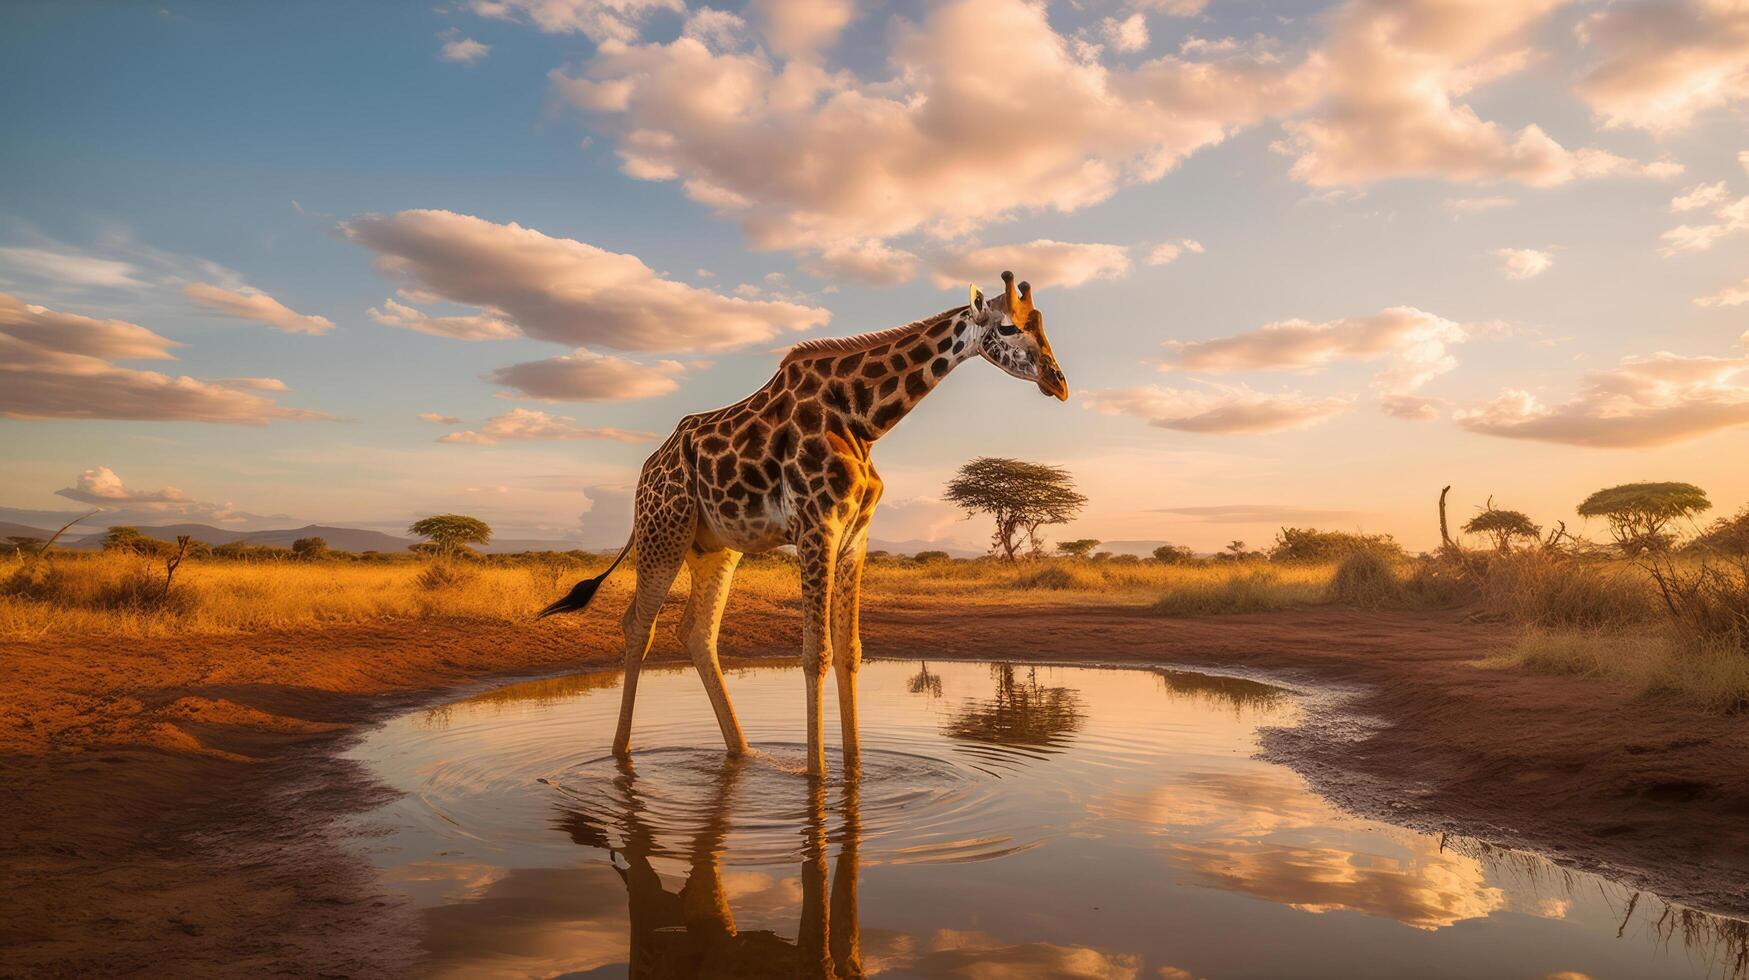 Giraffe natural background. Illustration photo